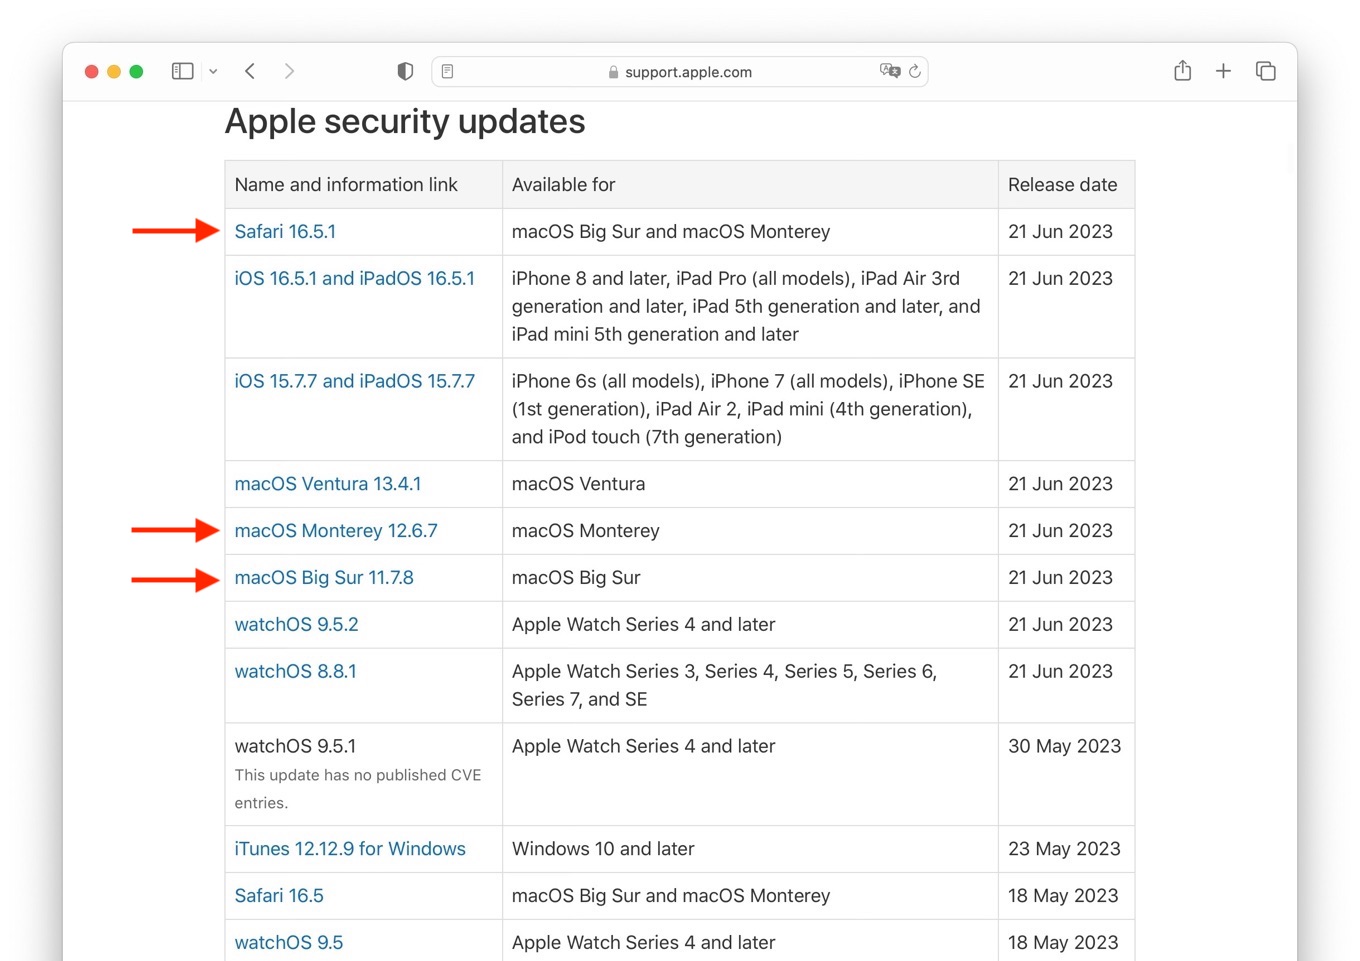 Apple security updates 21 June 2023